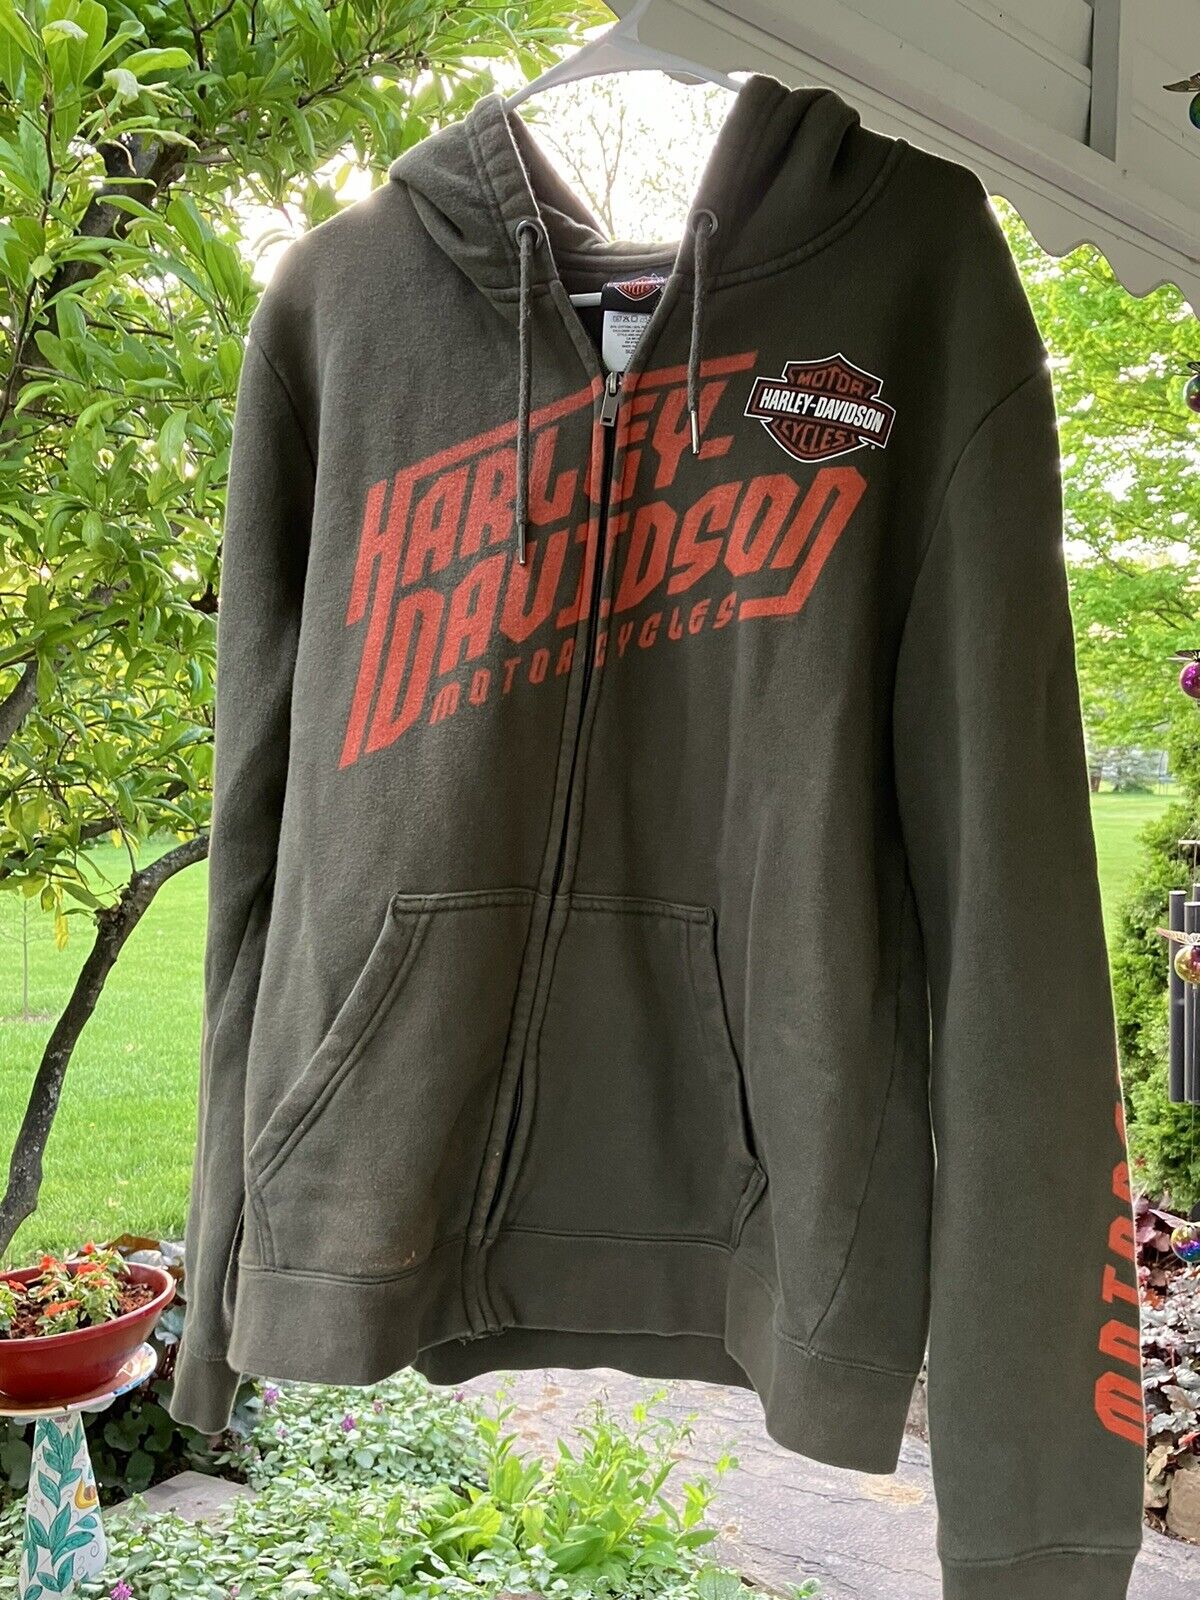 Harley Davidson Motorcycles Smoky Mountain Jacket Large Medium